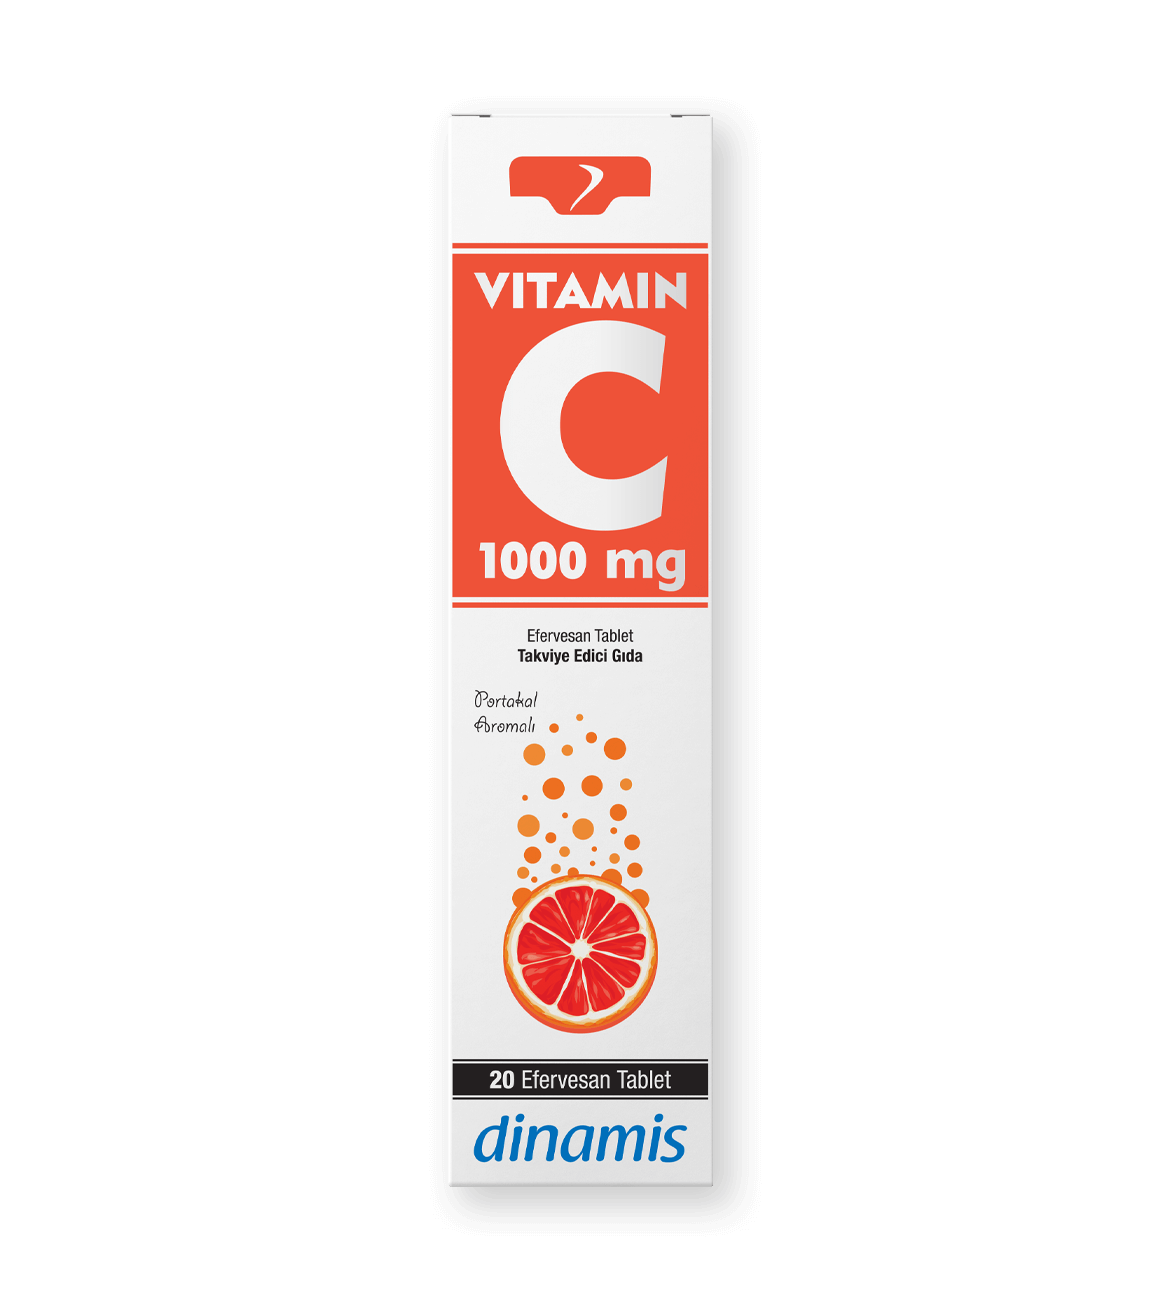 Vitamin C 1000 Mg (Efervesan) Recovered